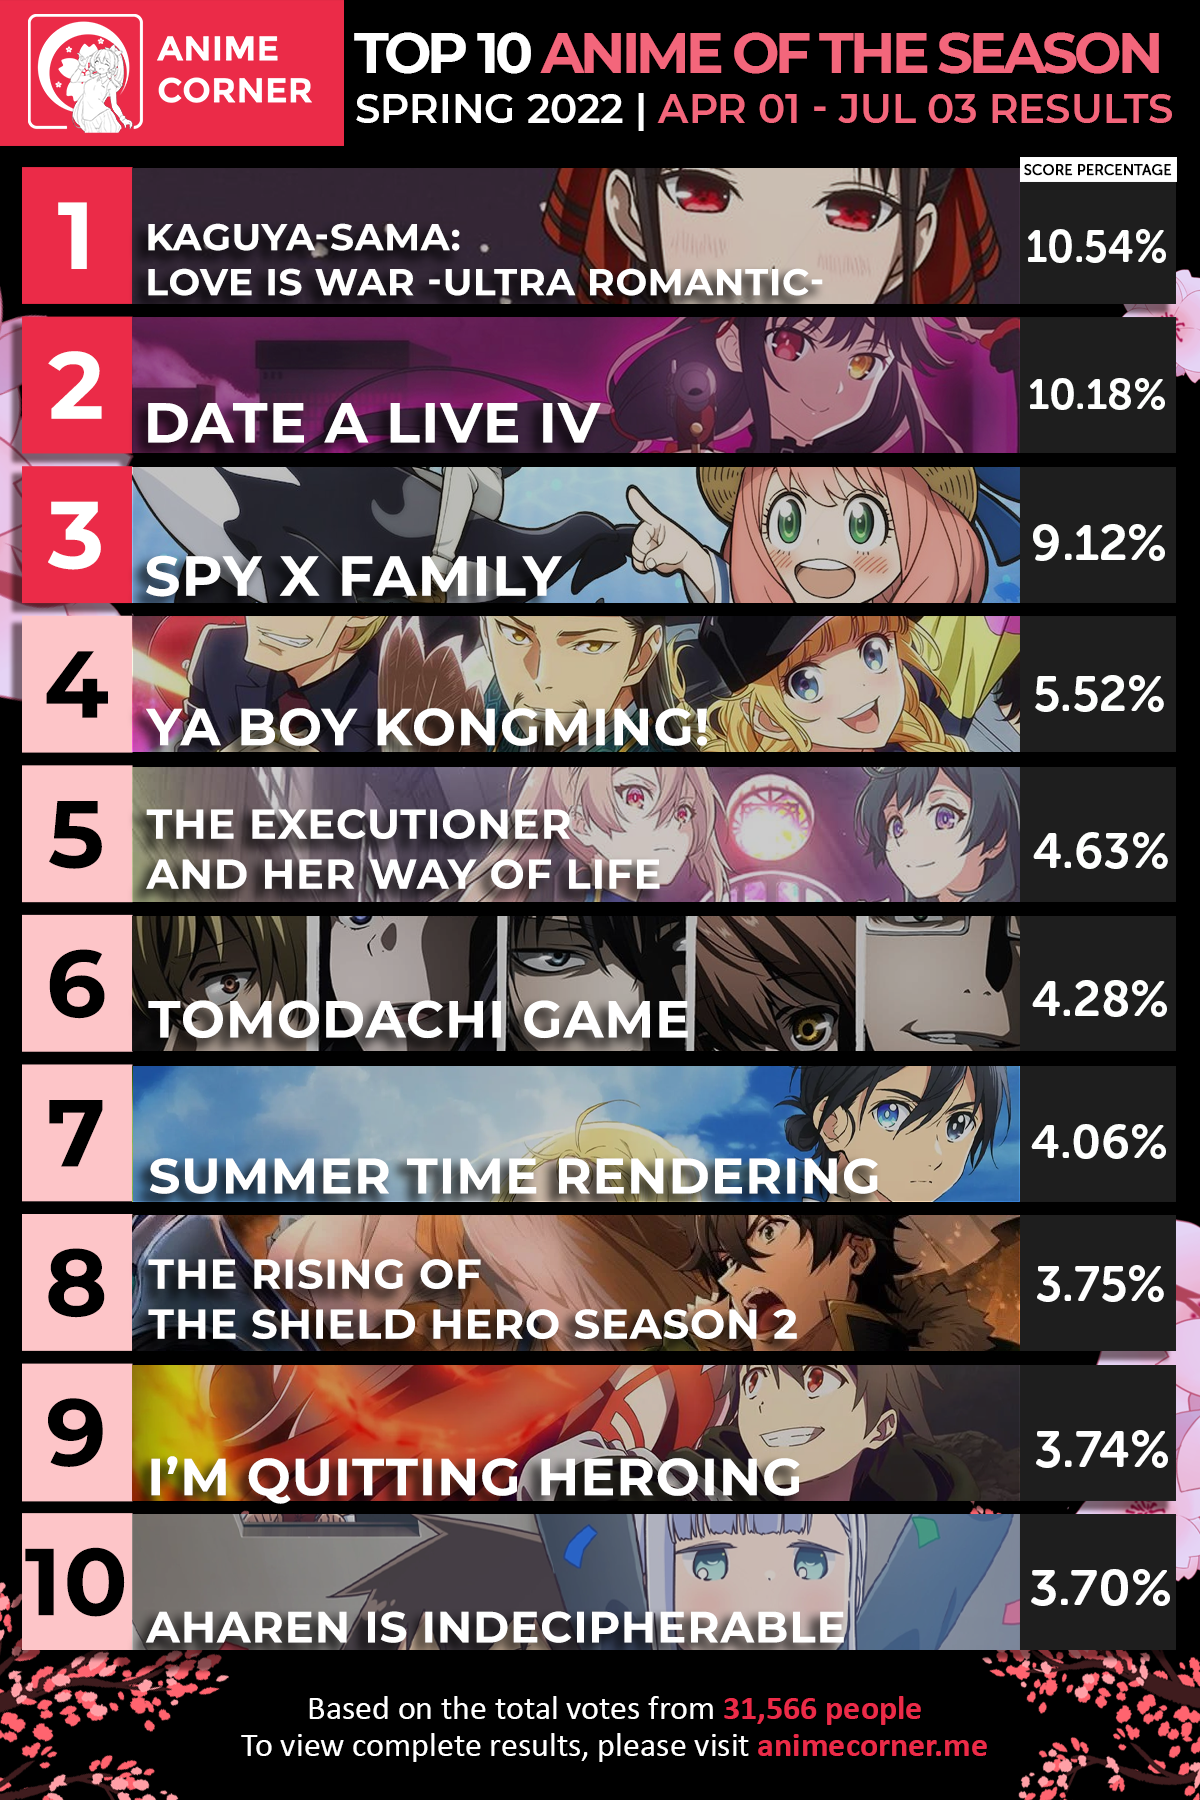 Spring 2022 Anime of the Season. Top 10 AOTS for Spring 2022 anime season/